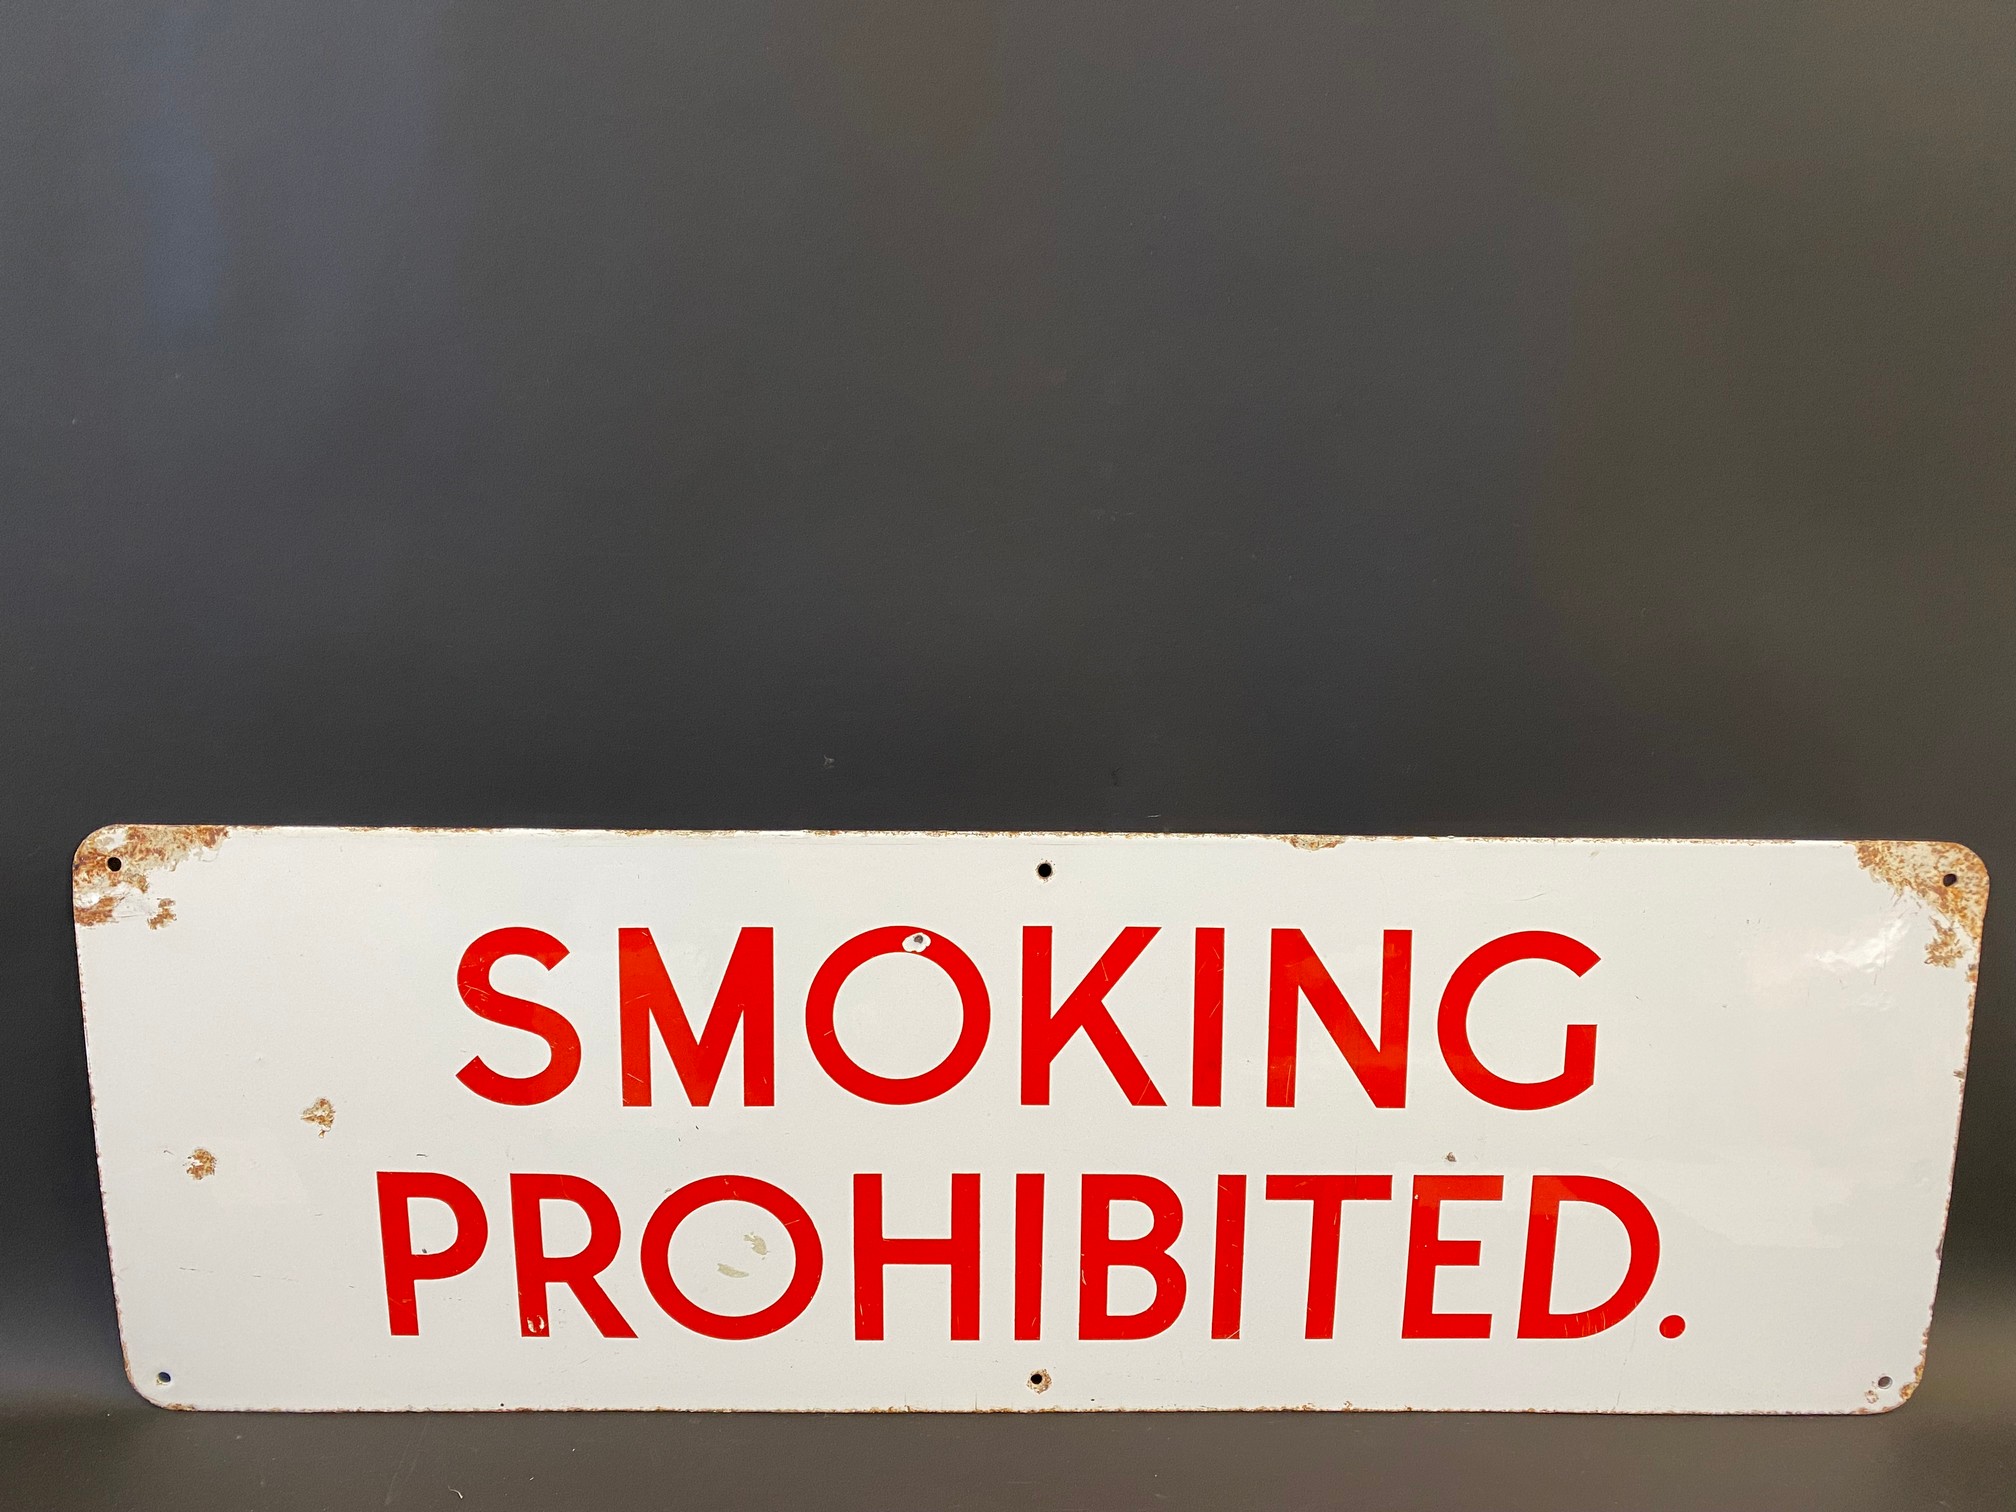 A Smoking Prohibited rectangular enamel sign, 36 x 12".